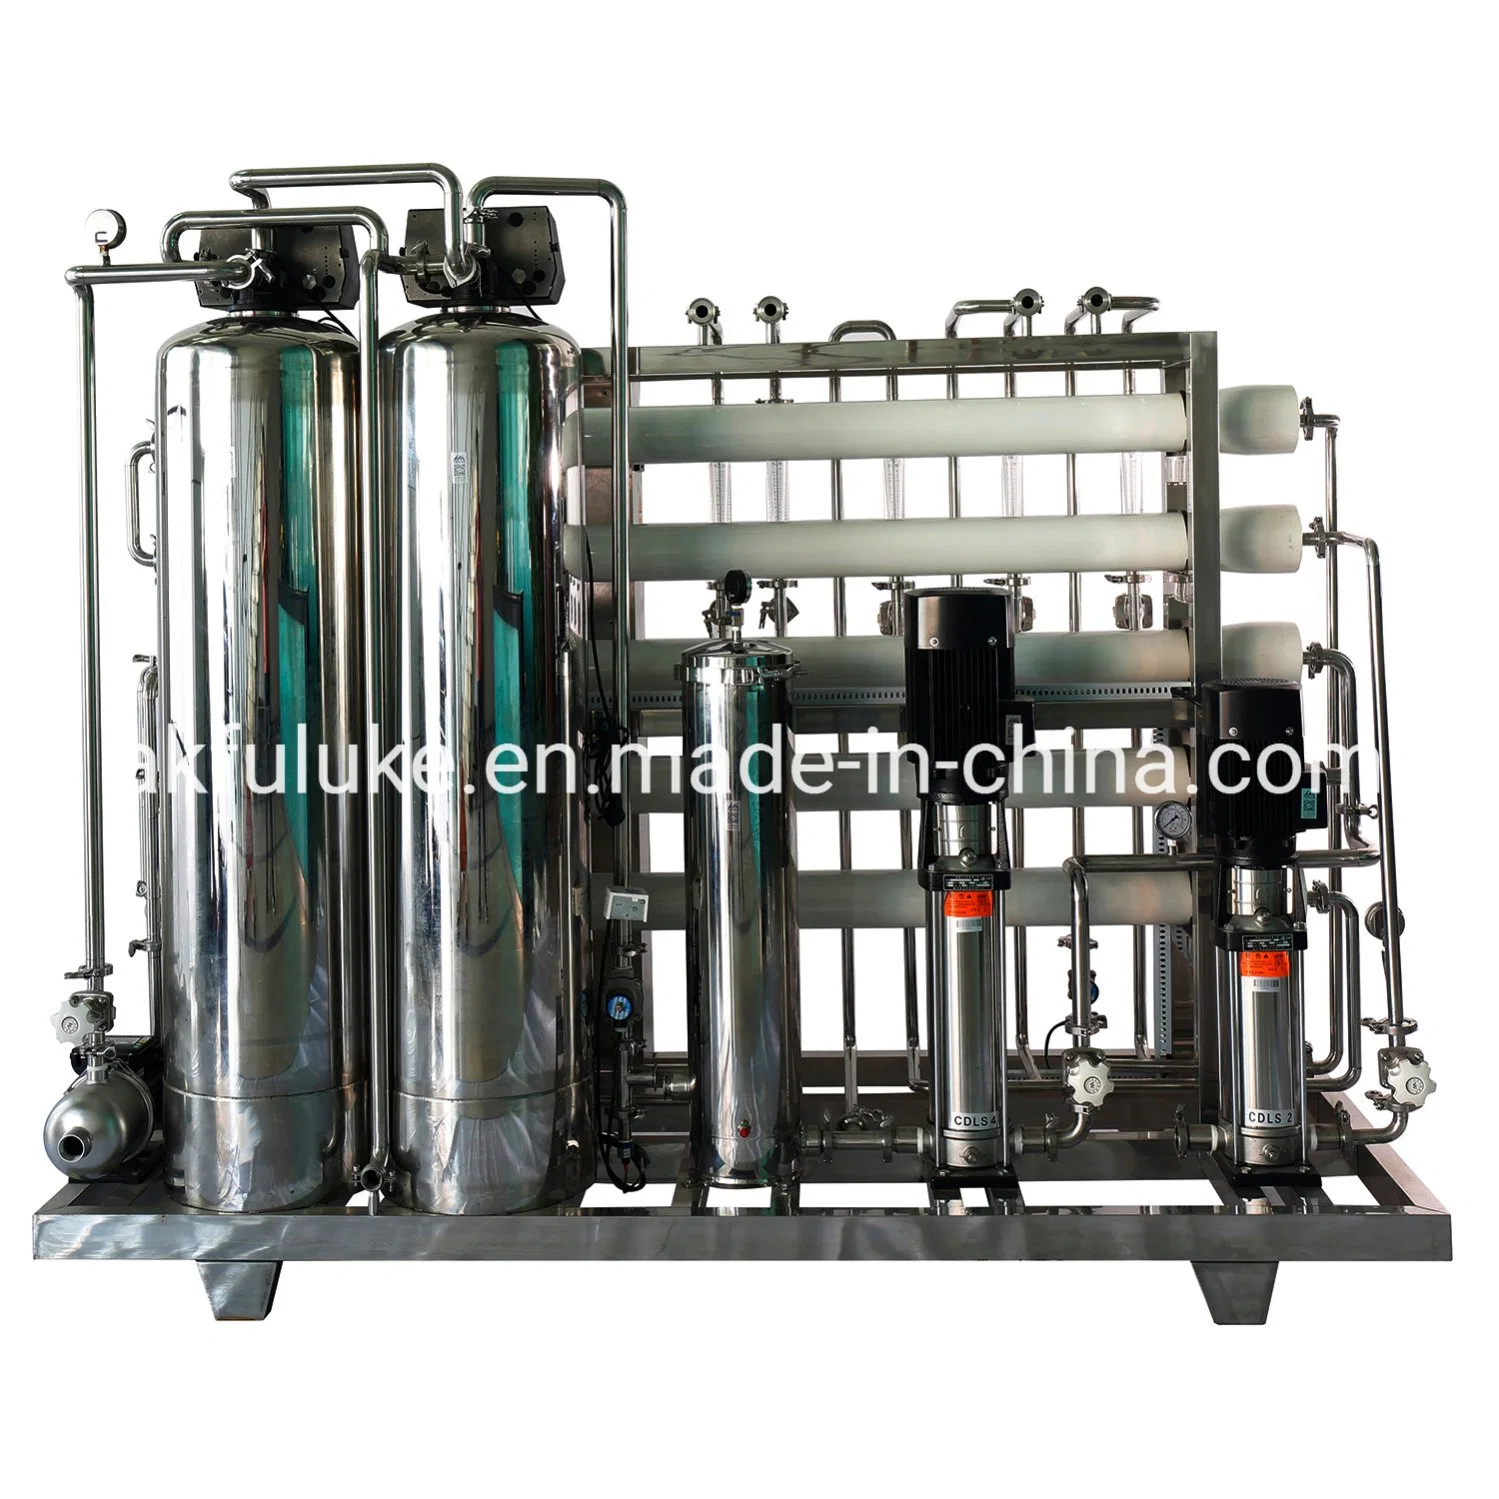 Behandlung Wasseraufbereitungs Ausrüstung Abwasseraufbereitungsanlagen Meerwasser Bestrahlungsgeräte